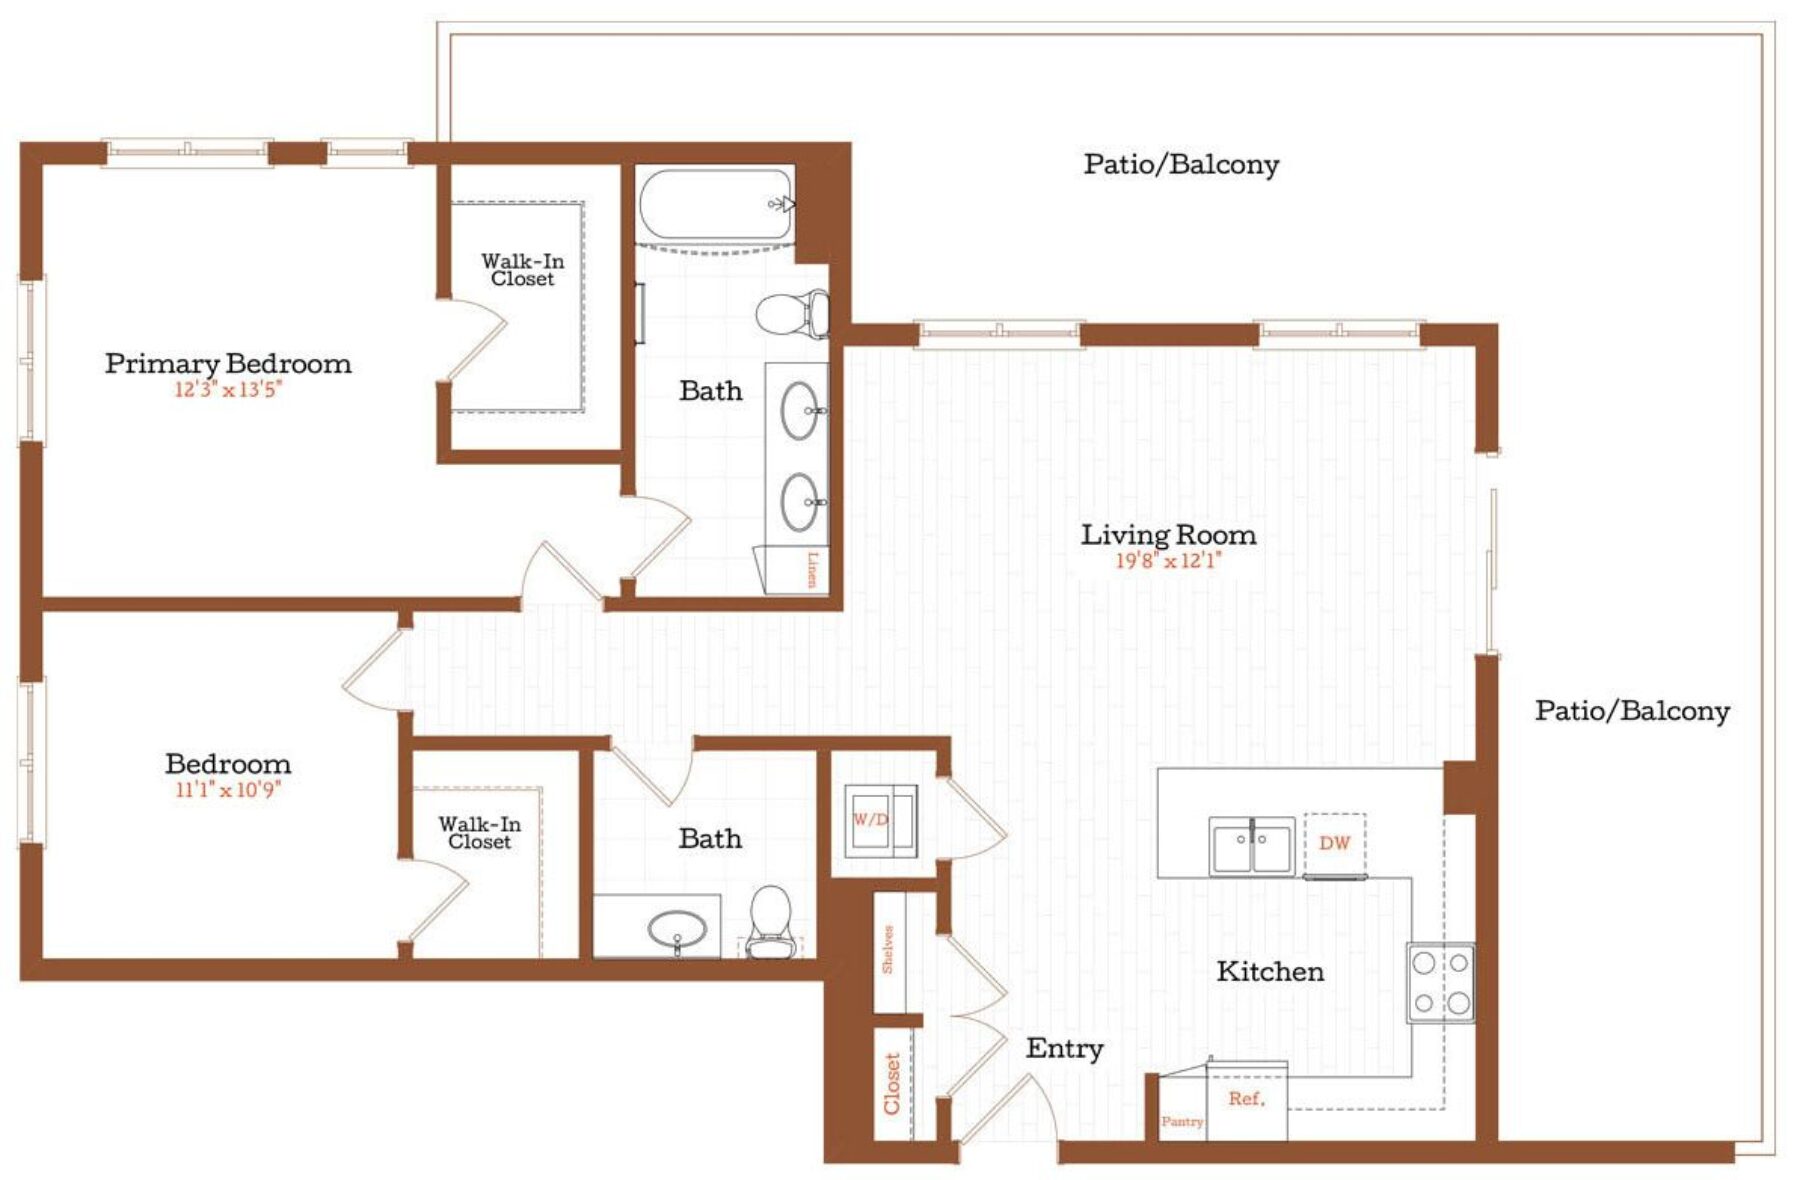 Plan Image: B4 - 2 Bedroom